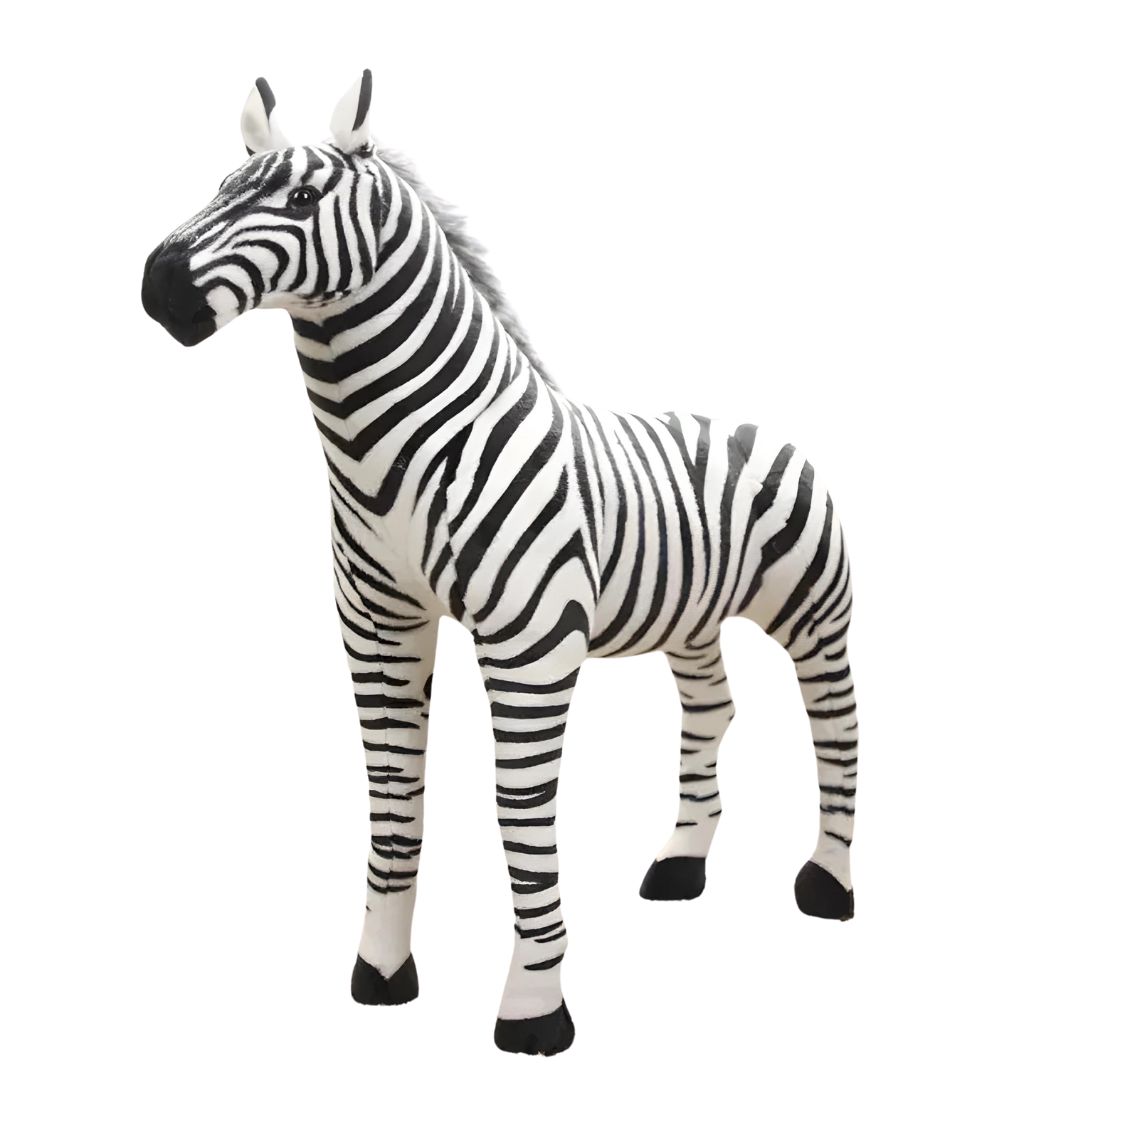 Zebra Stuffed Animal Rental